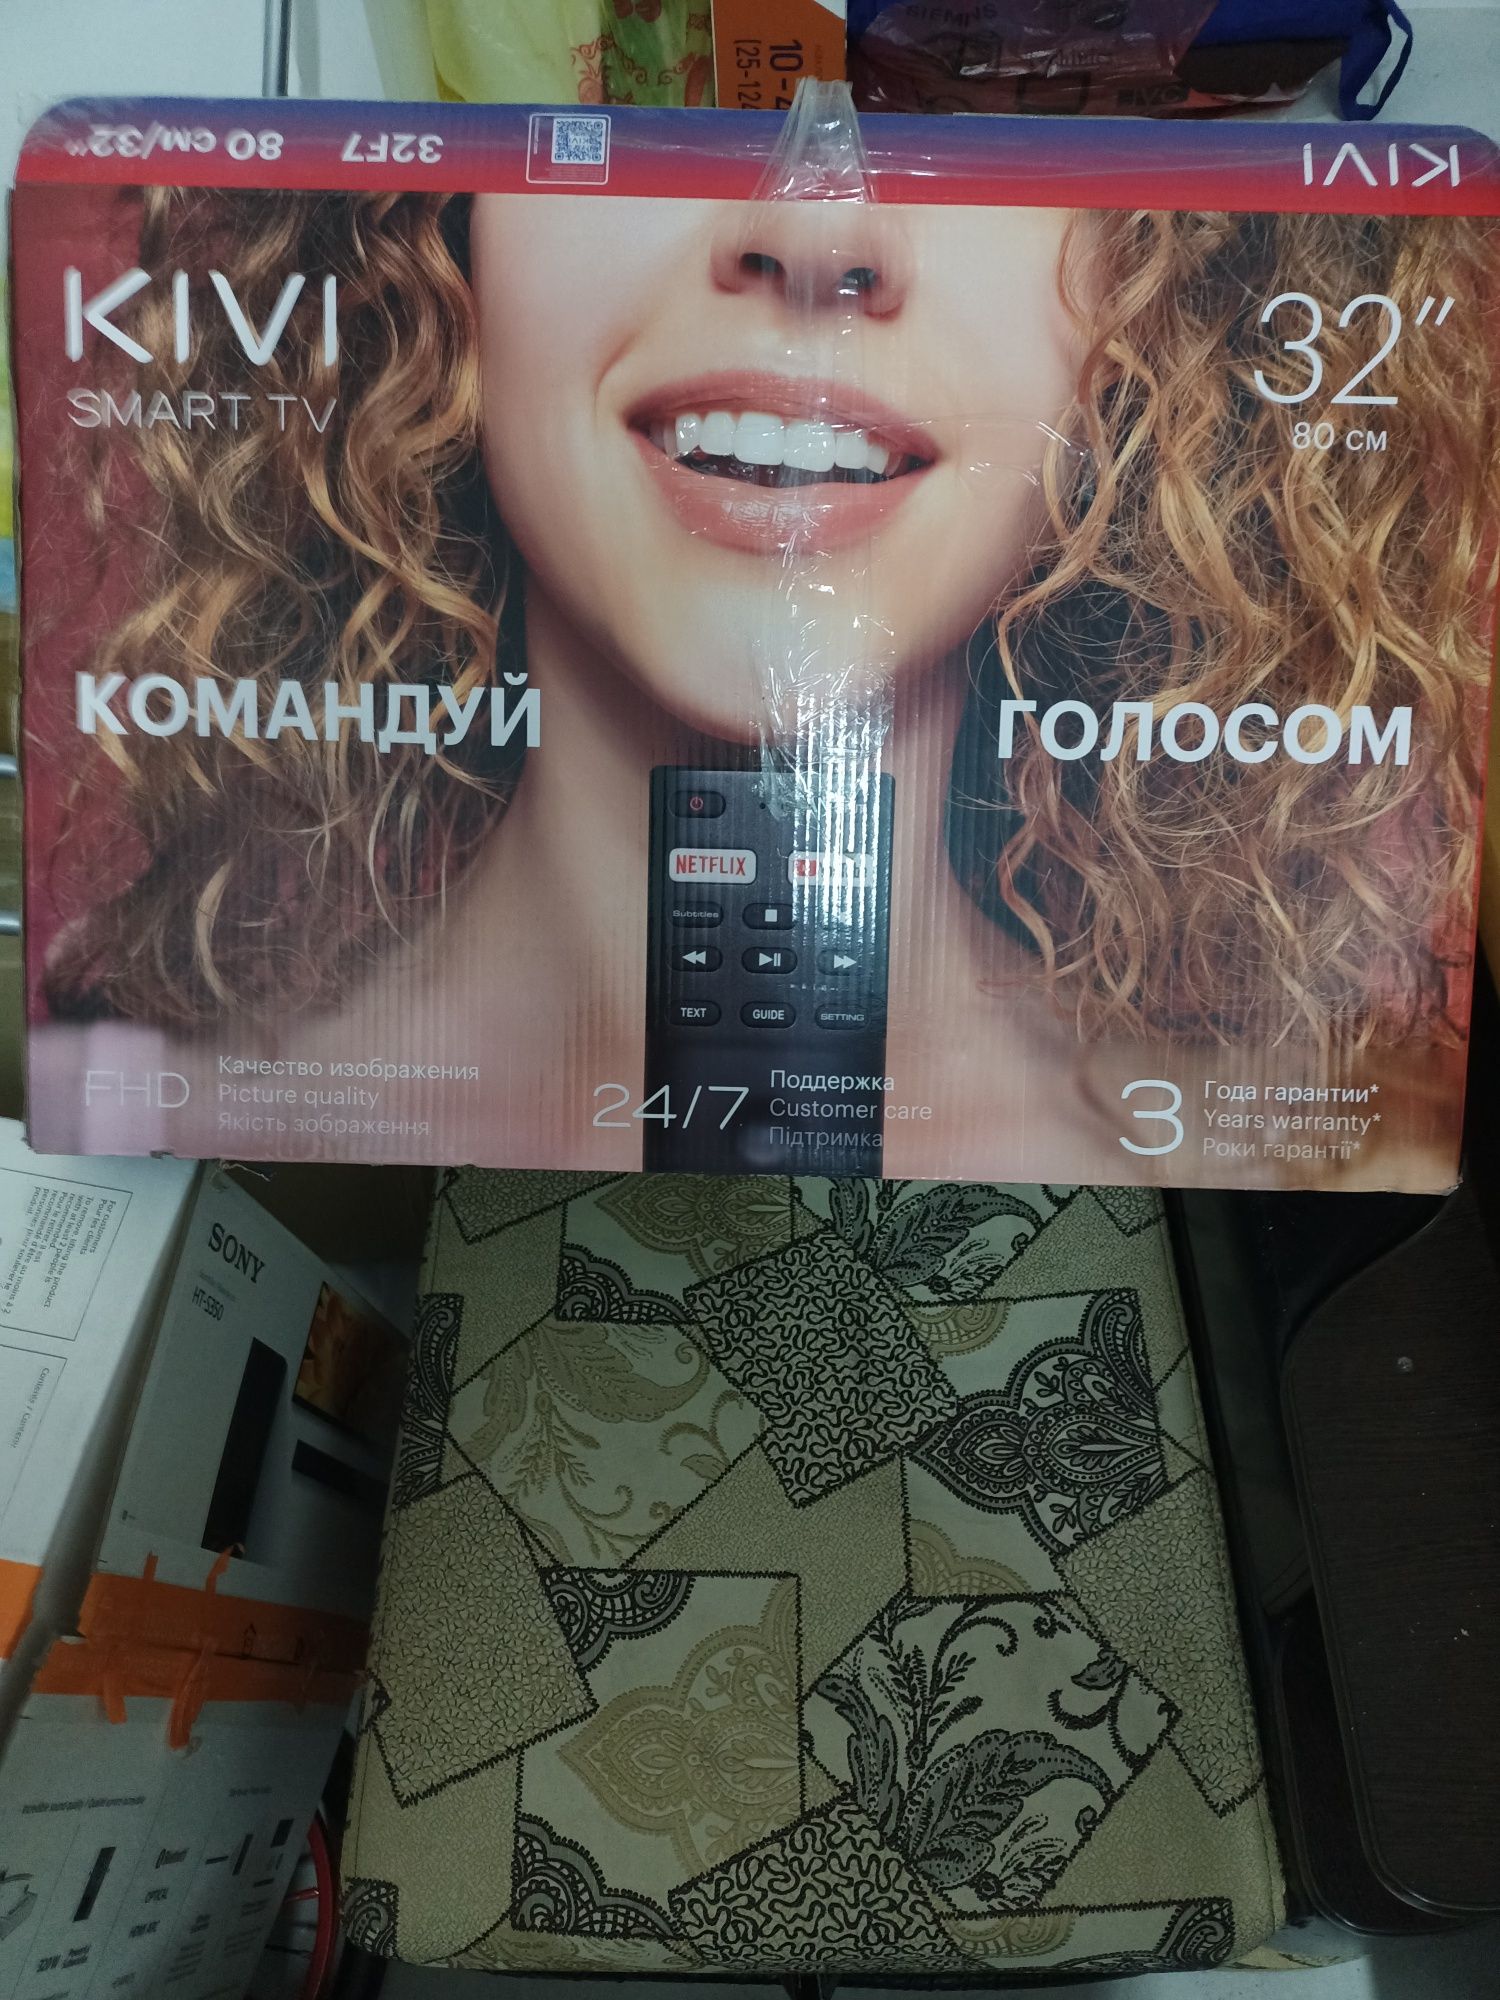 Продам телевизор Kivi, Саунд бар SoNi.